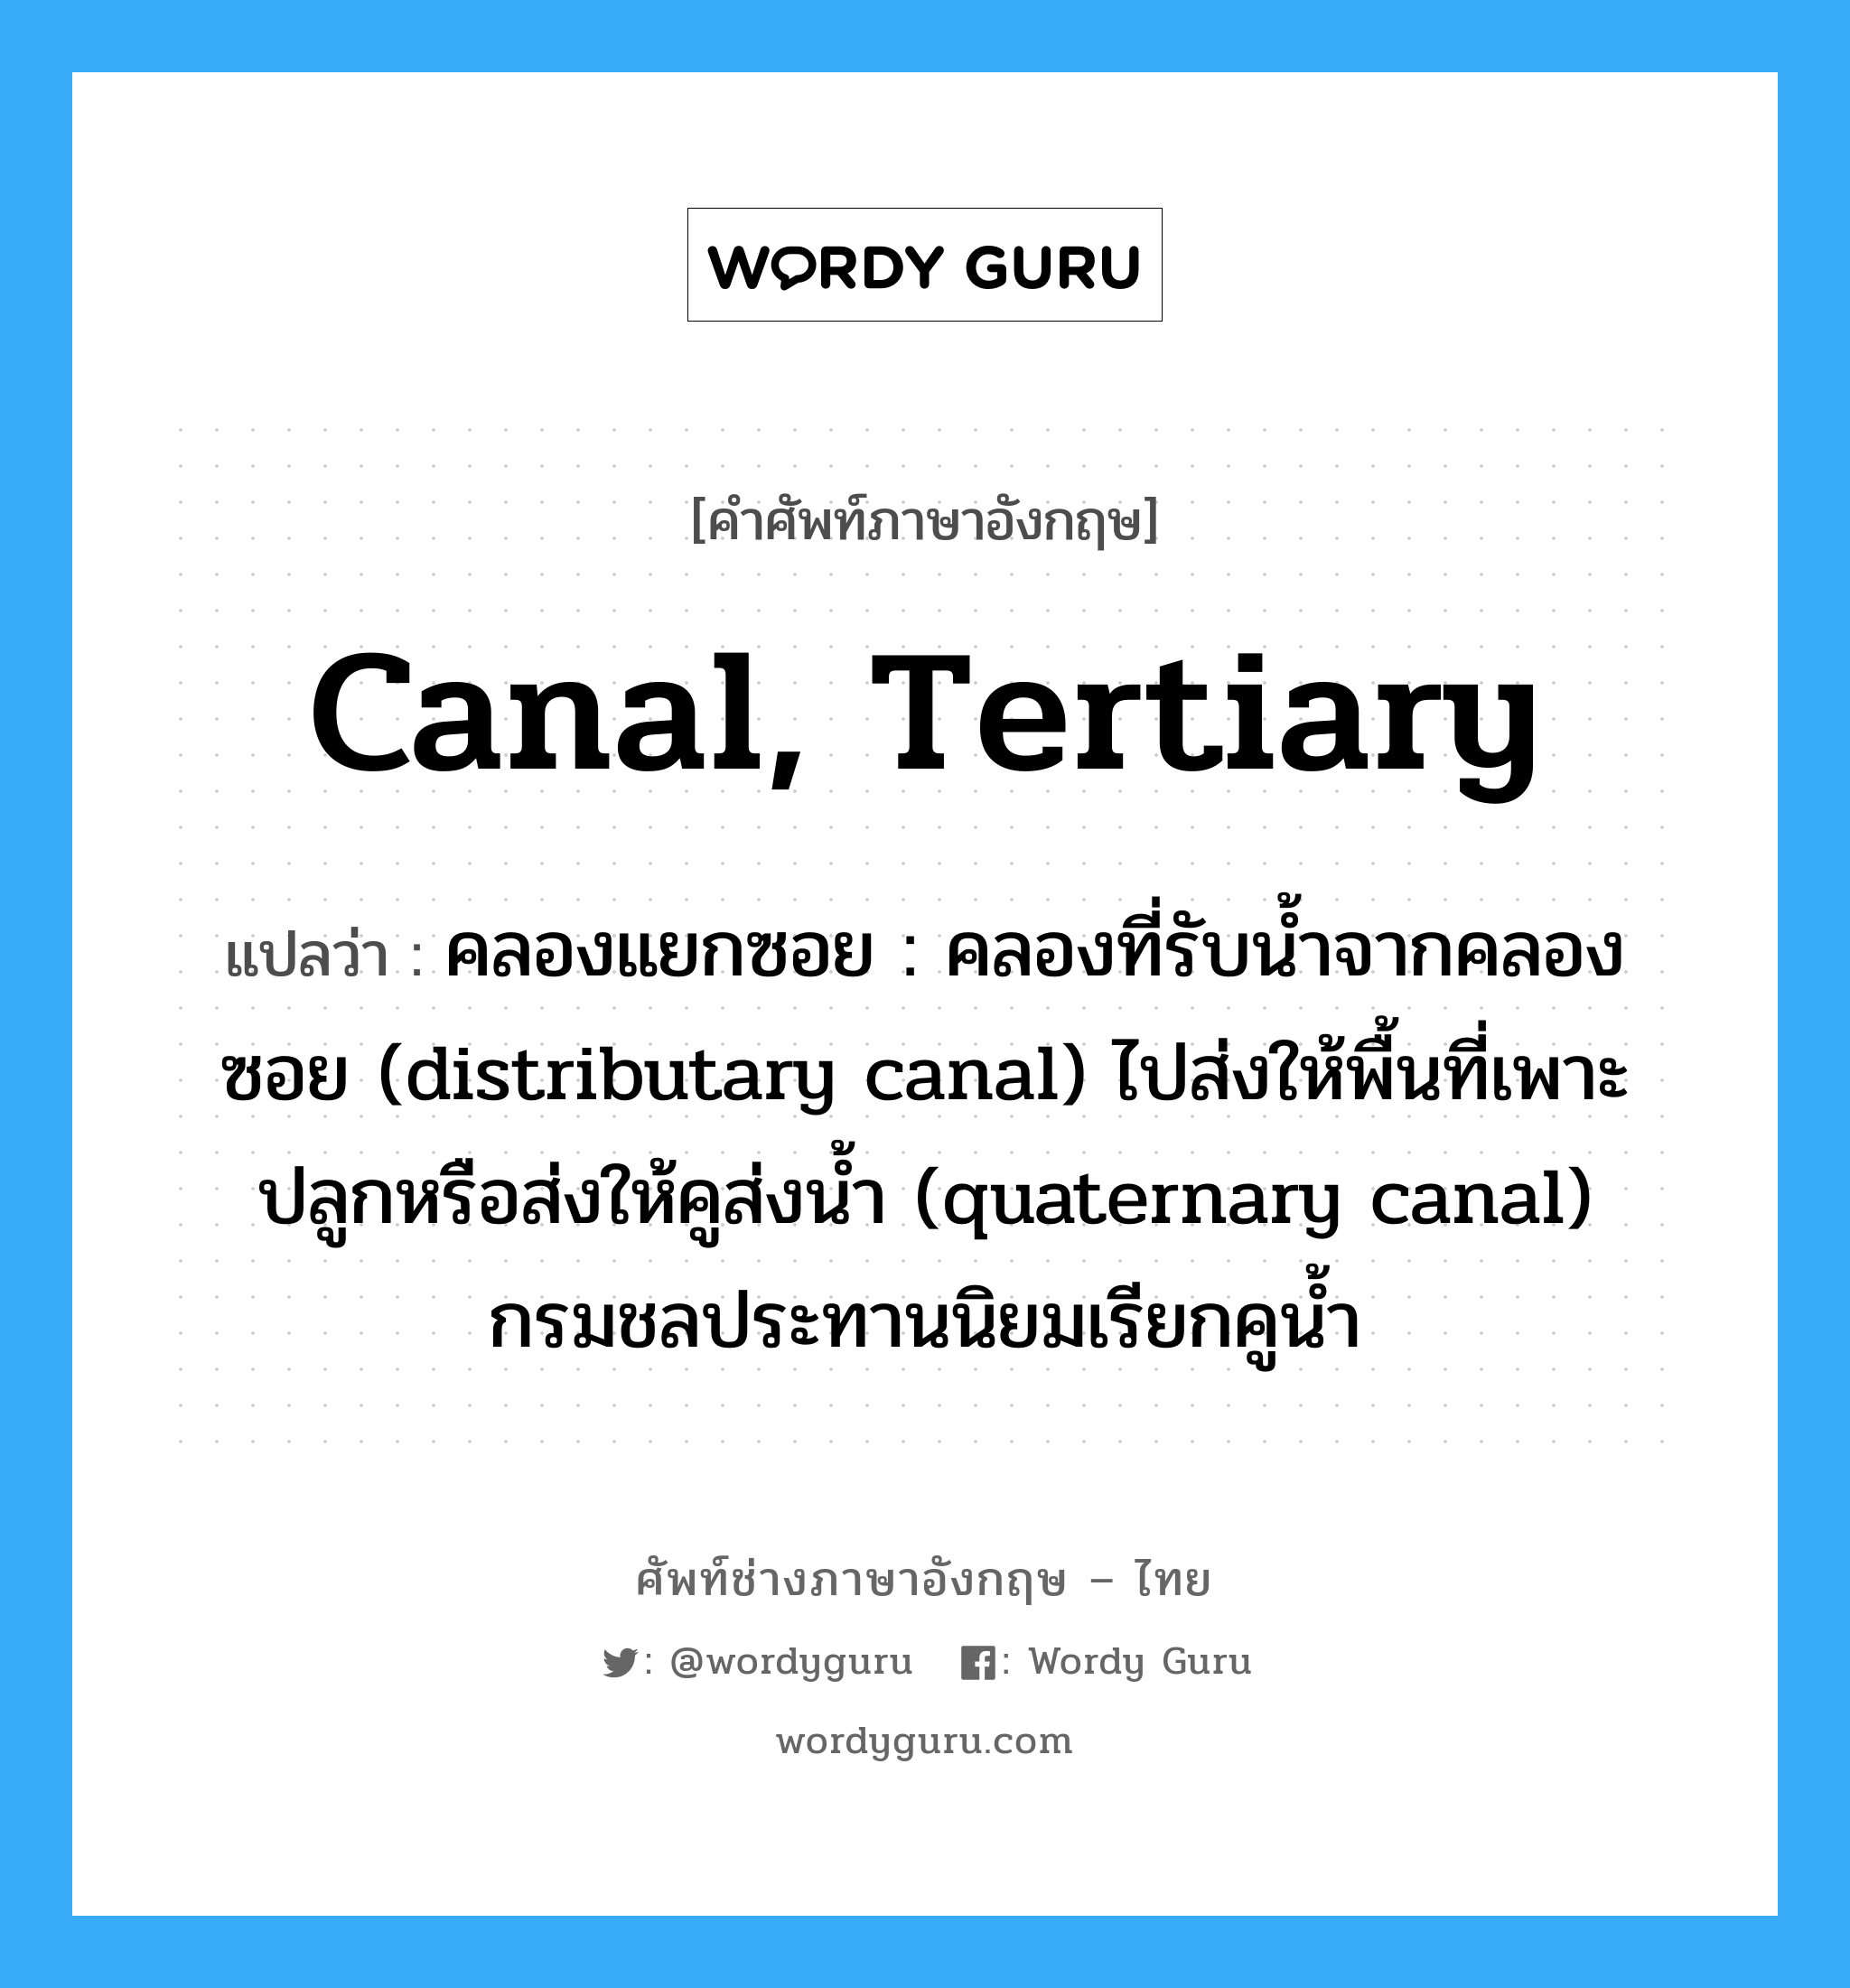 canal, tertiary แปลว่า?, คำศัพท์ช่างภาษาอังกฤษ - ไทย canal, tertiary คำศัพท์ภาษาอังกฤษ canal, tertiary แปลว่า คลองแยกซอย : คลองที่รับน้ำจากคลองซอย (distributary canal) ไปส่งให้พื้นที่เพาะปลูกหรือส่งให้คูส่งน้ำ (quaternary canal) กรมชลประทานนิยมเรียกคูน้ำ